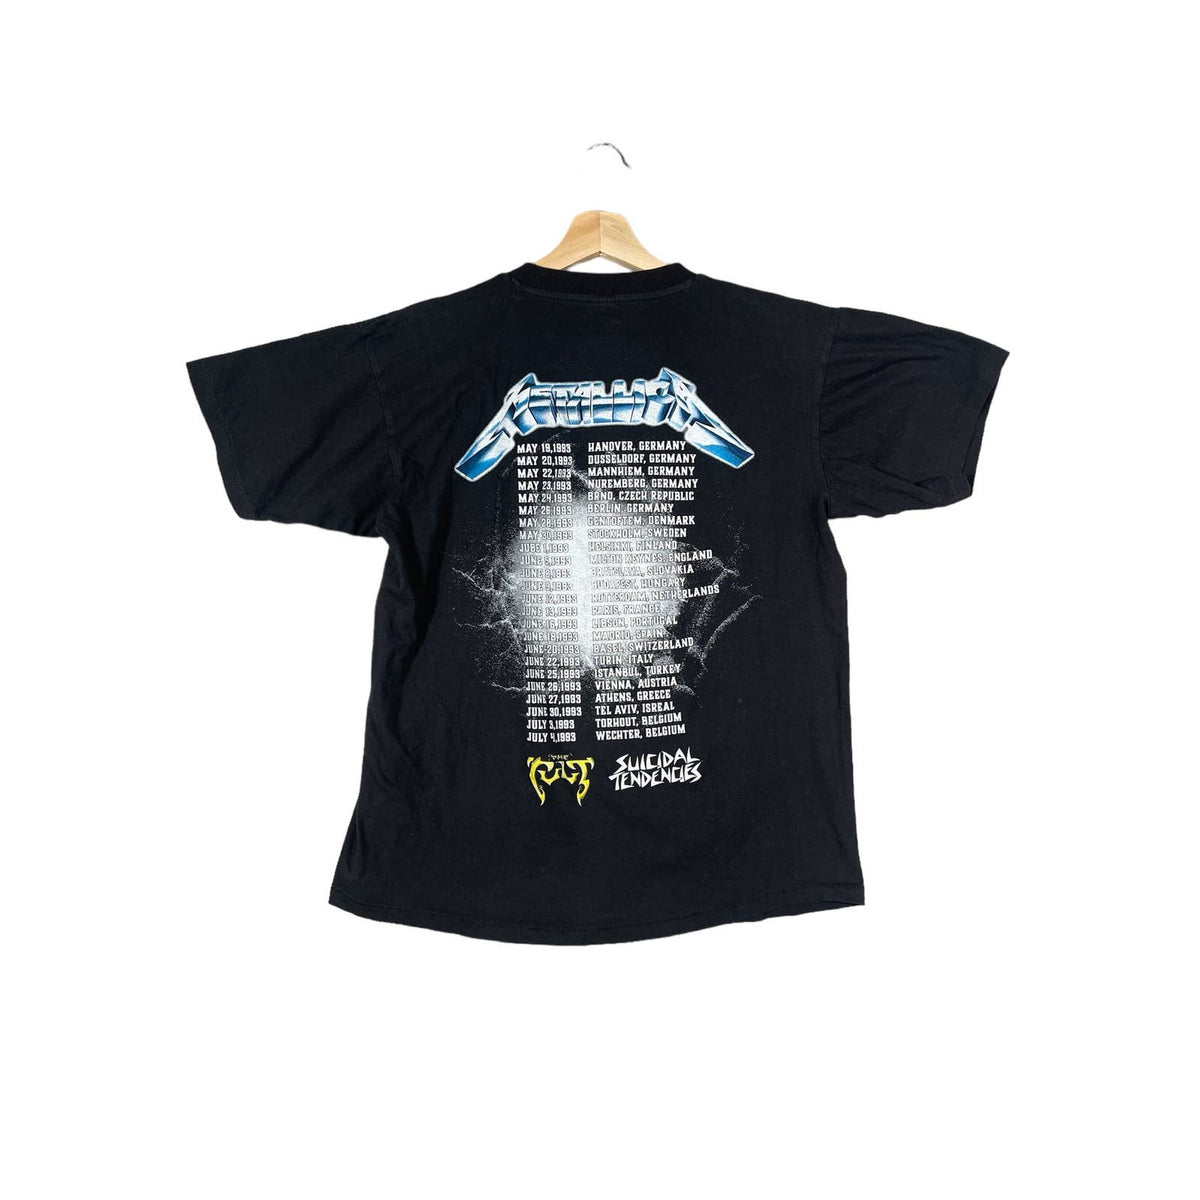 Vintage 1993 Metallica Tour T-Shirt